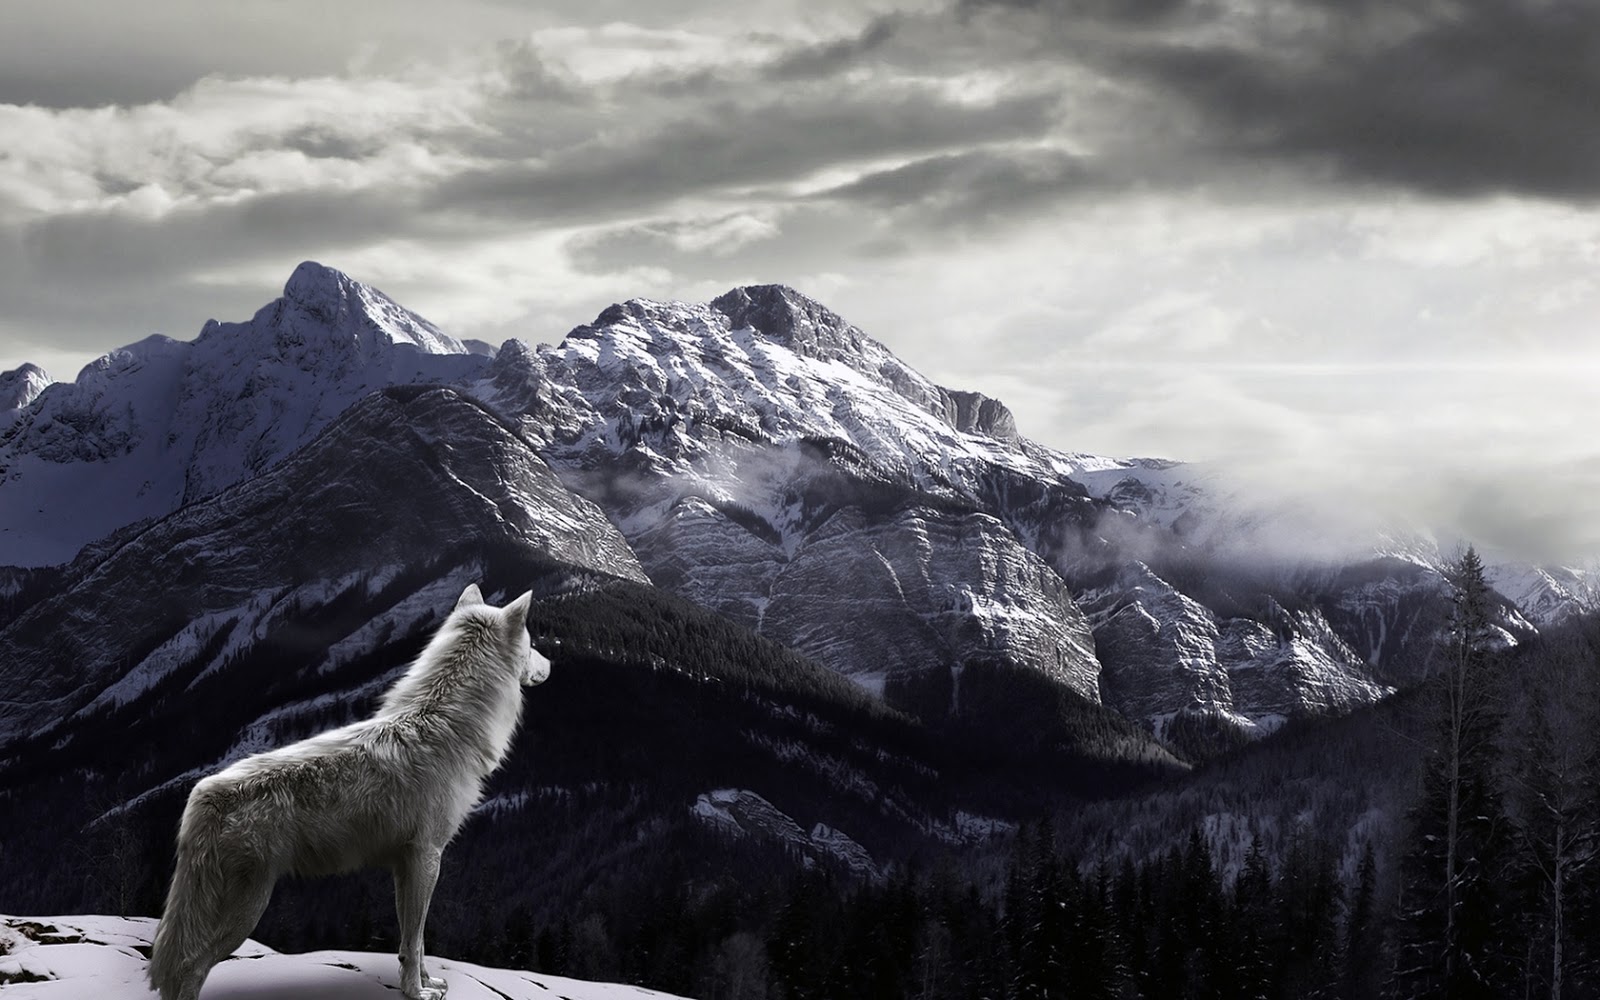 https://blogger.googleusercontent.com/img/b/R29vZ2xl/AVvXsEiTJzUilK_AWvRoBMA4T7_IQhQUd1WSsTTeLPZfMIl88GU43SV7jCgrCrLEwOlg4A9TXY4YhU8mTrYxsxZE8MKHDqRnanmTfrjefXkDz8mjOReU7xYX3ZIqvRtSRVCqqOtZnY_7ix7JUraV/s1600/Wolf-Watching-Snowy-Fog-Covered-Mountains-HD-Wallpaper.jpg